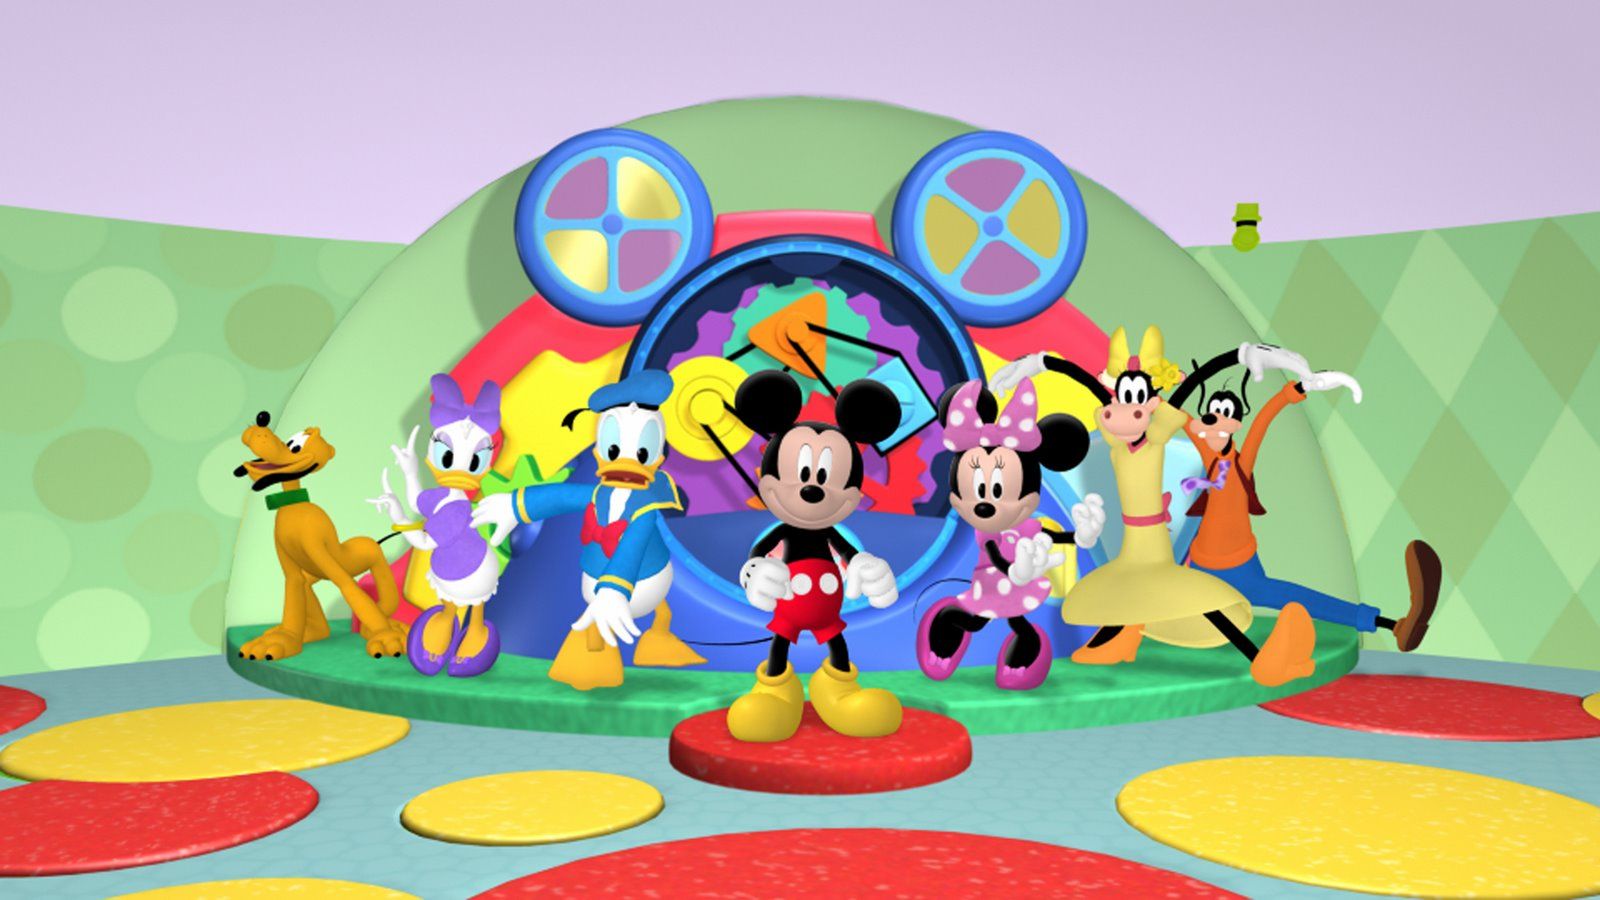 Playhouse Disney Background. Playhouse Wallpaper, Playhouse Disney Background and Playhouse Disney Wallpaper